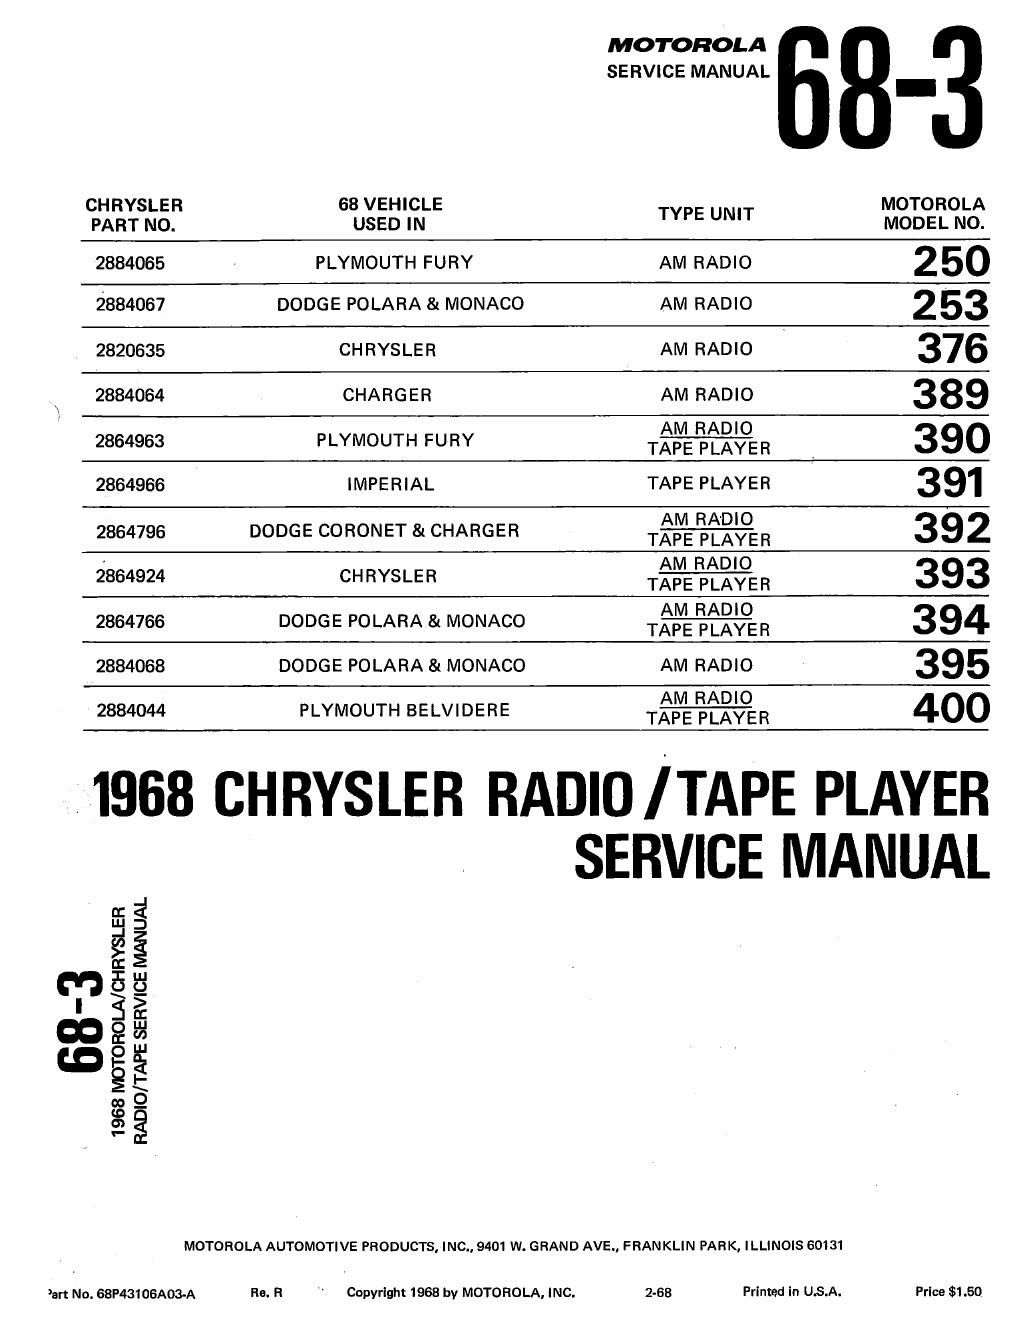 motorola 394 service manual